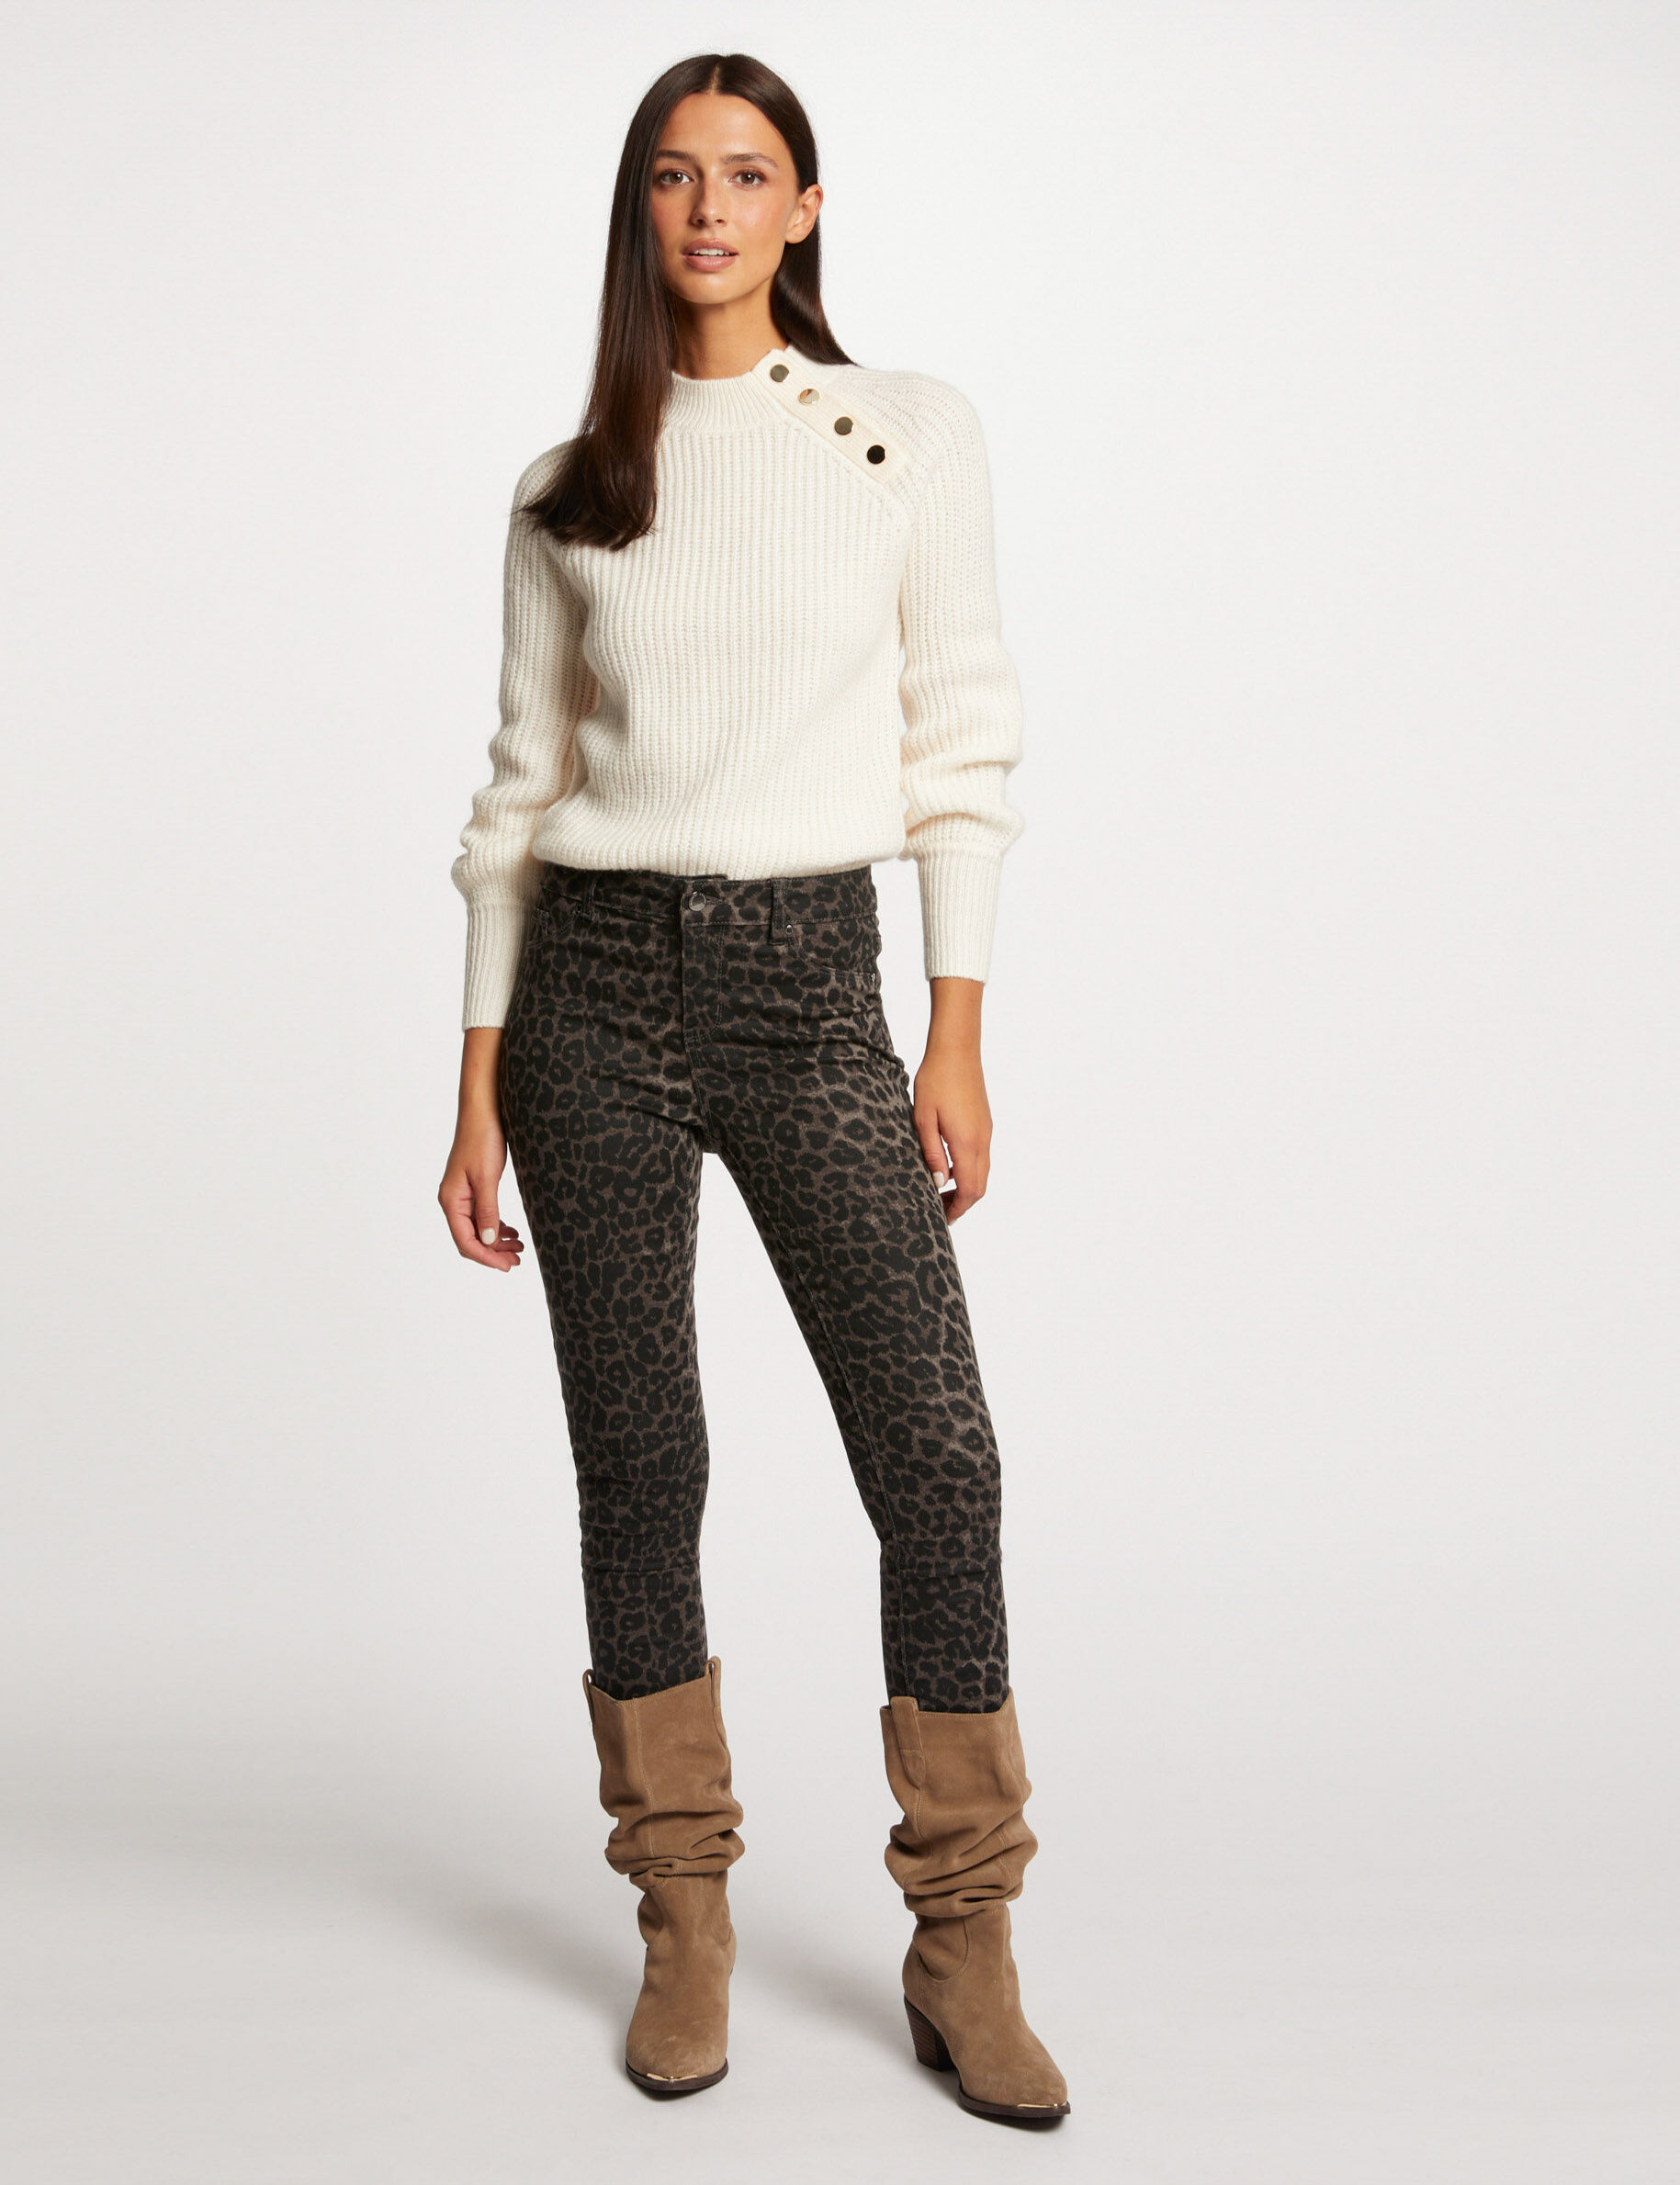 Ladies Skinny Trousers Pants Geometric Print Cotton Size 4 Cynthia Rowley  70's Style Mod Clothing - Etsy